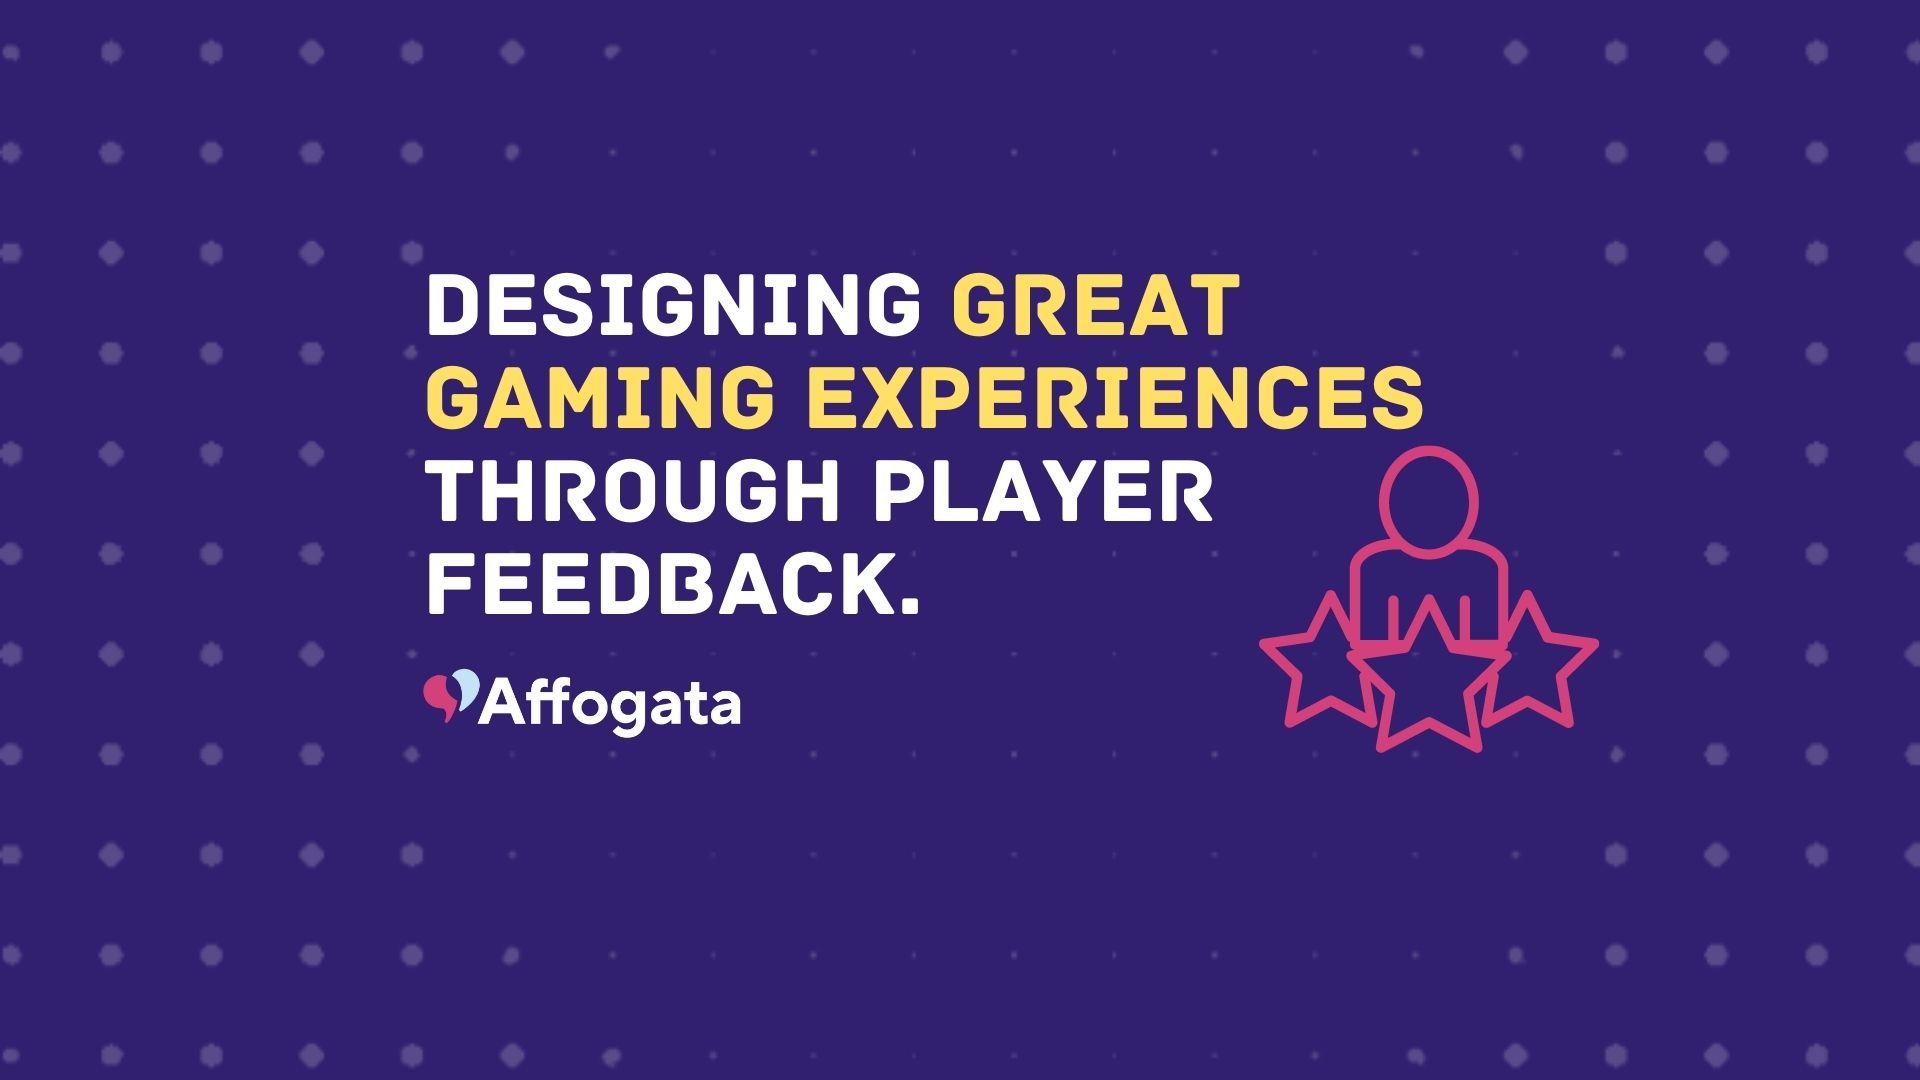 Designing great gaming experiences through player feedback